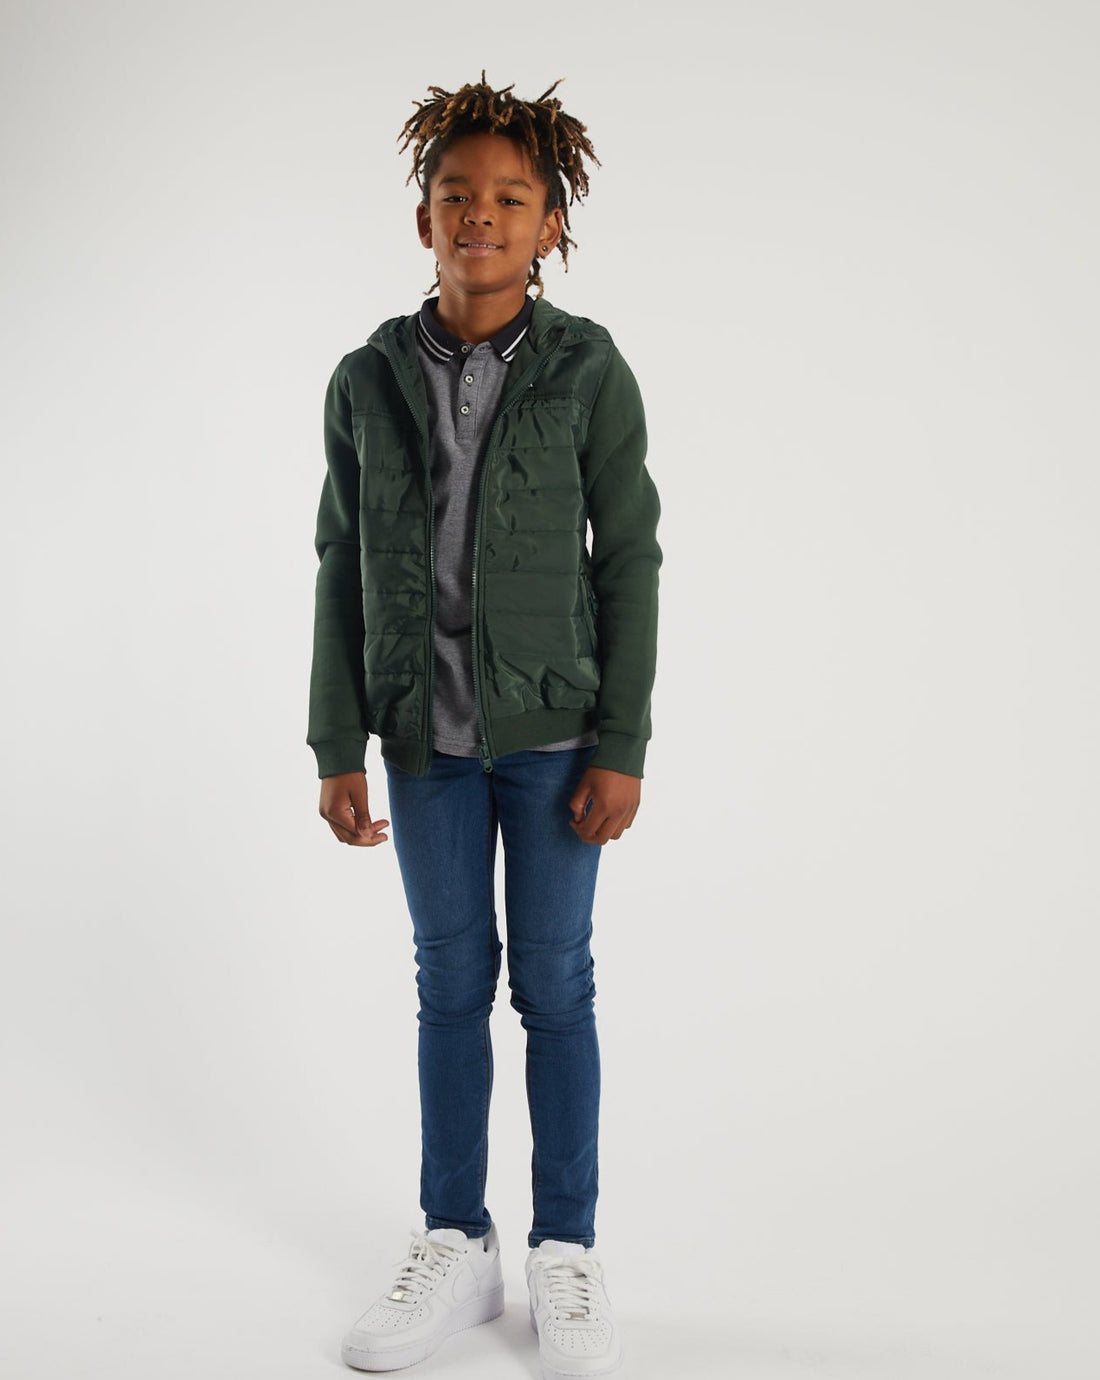 Boy's Granger Zipper - Green-Model Full Front View